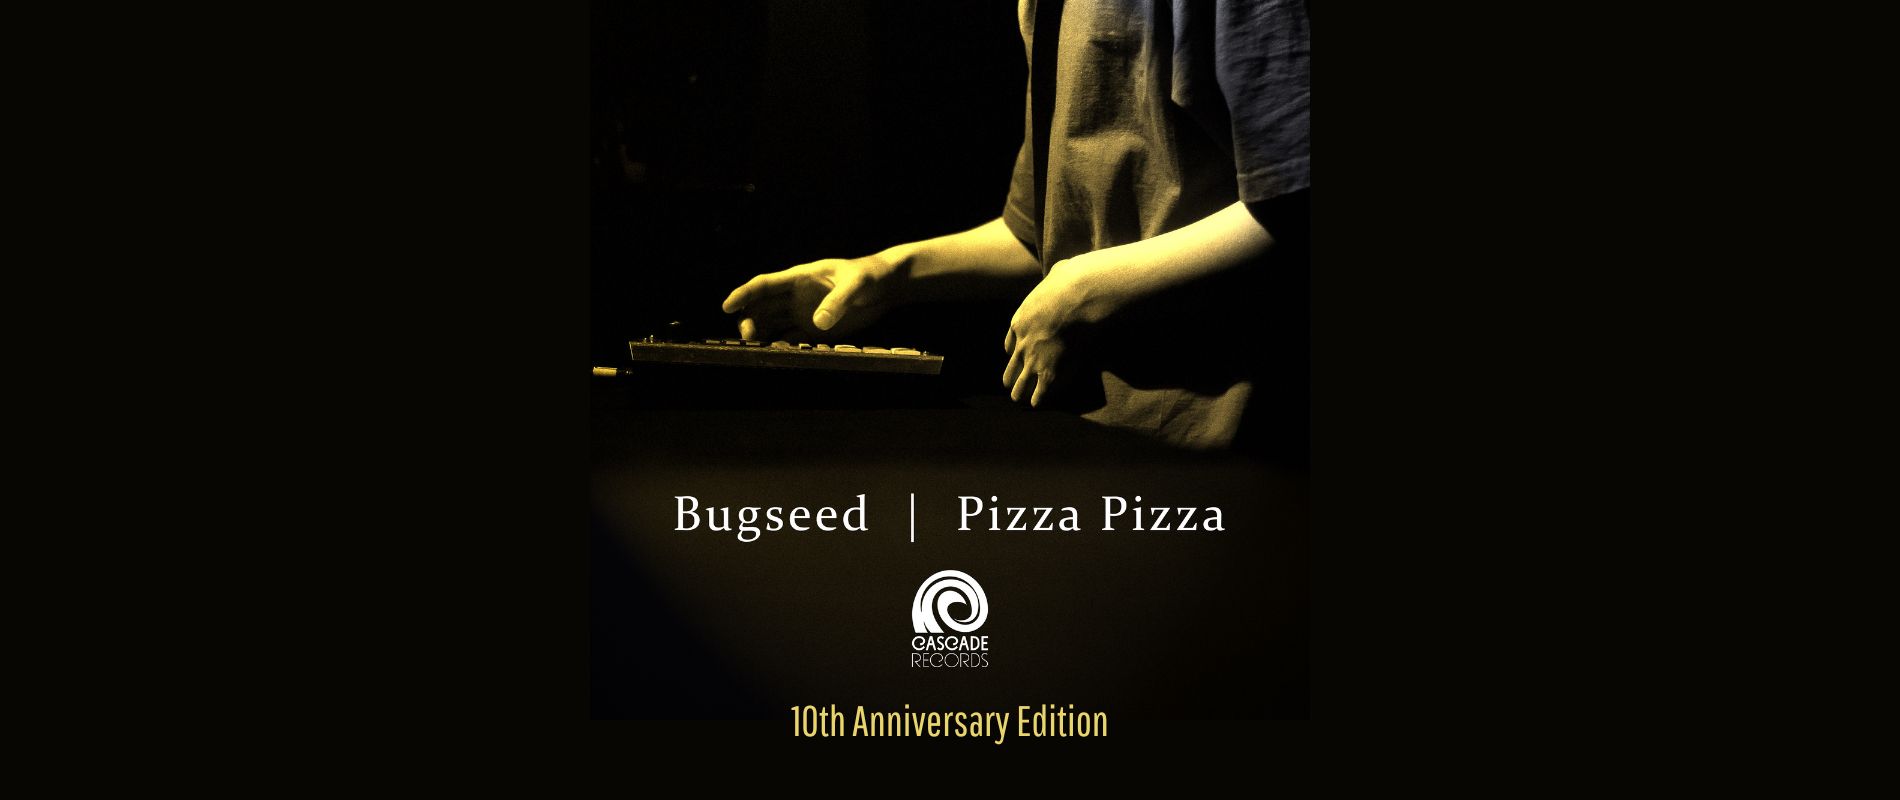 Bugseed - Pizza Pizza - 10th Anniversary Edition Cover chill lofi hip hop study beats